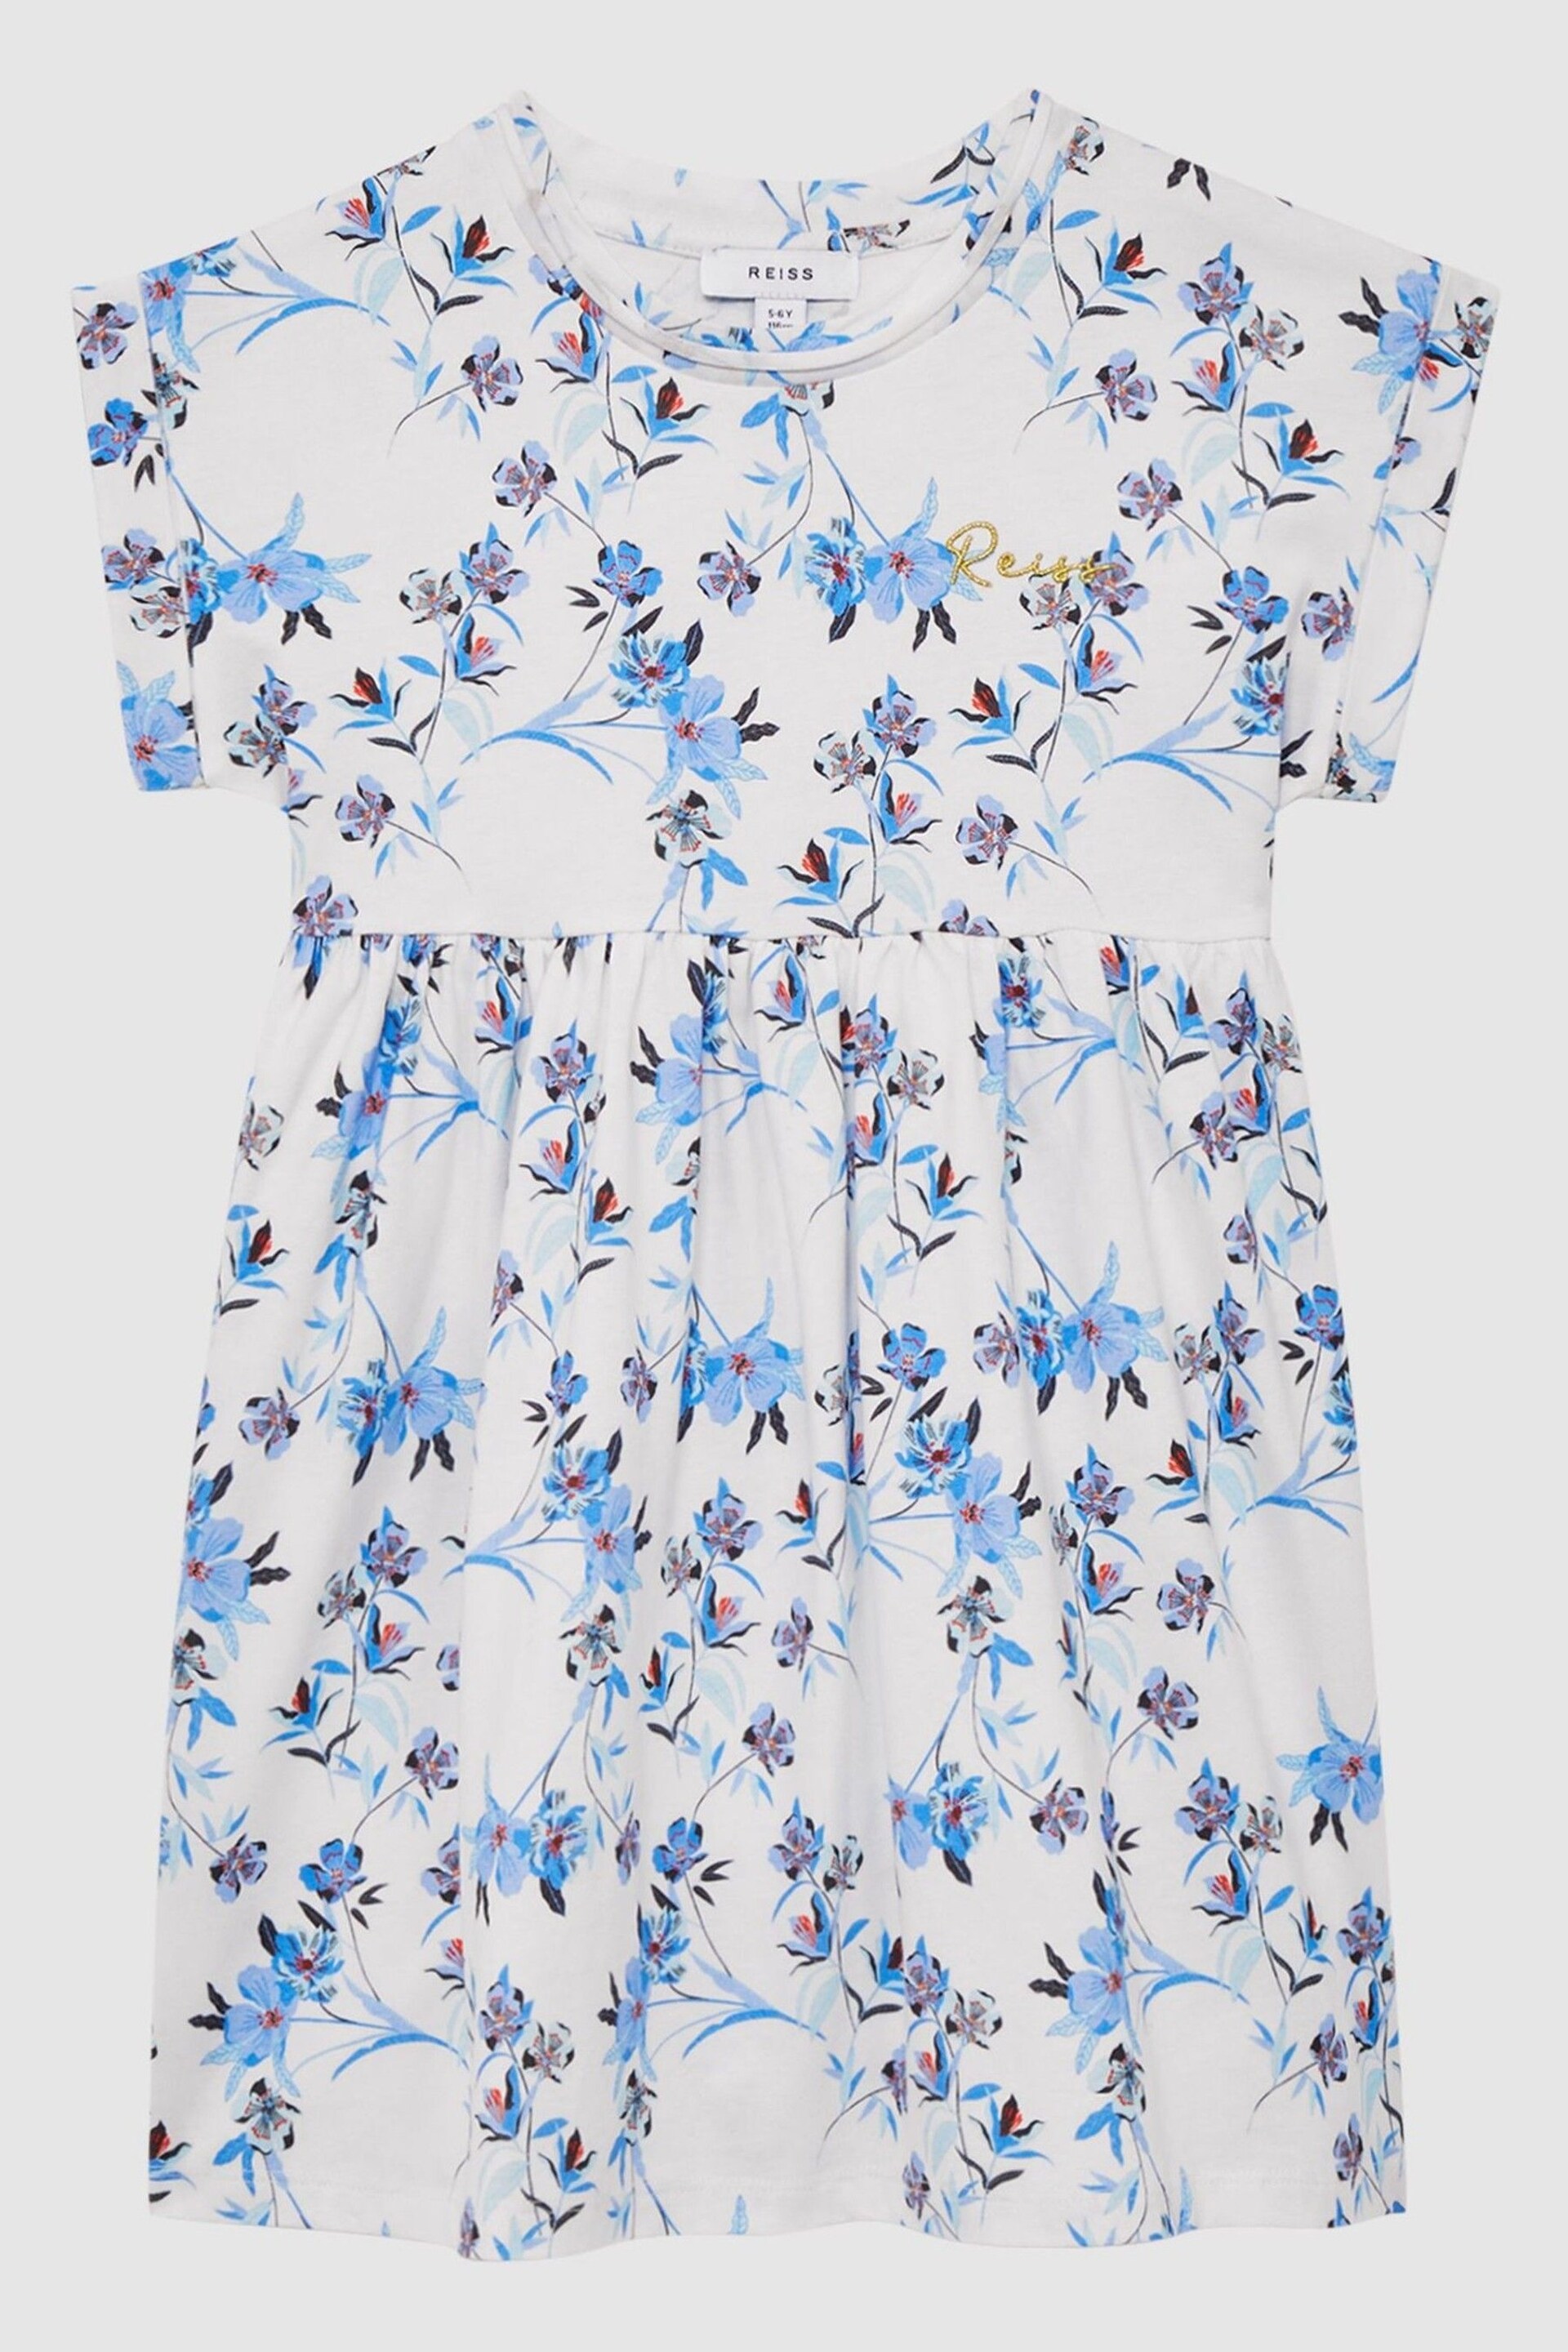 Reiss Blue Print Dahlia Senior Floral Print Jersey Dress - Image 2 of 6